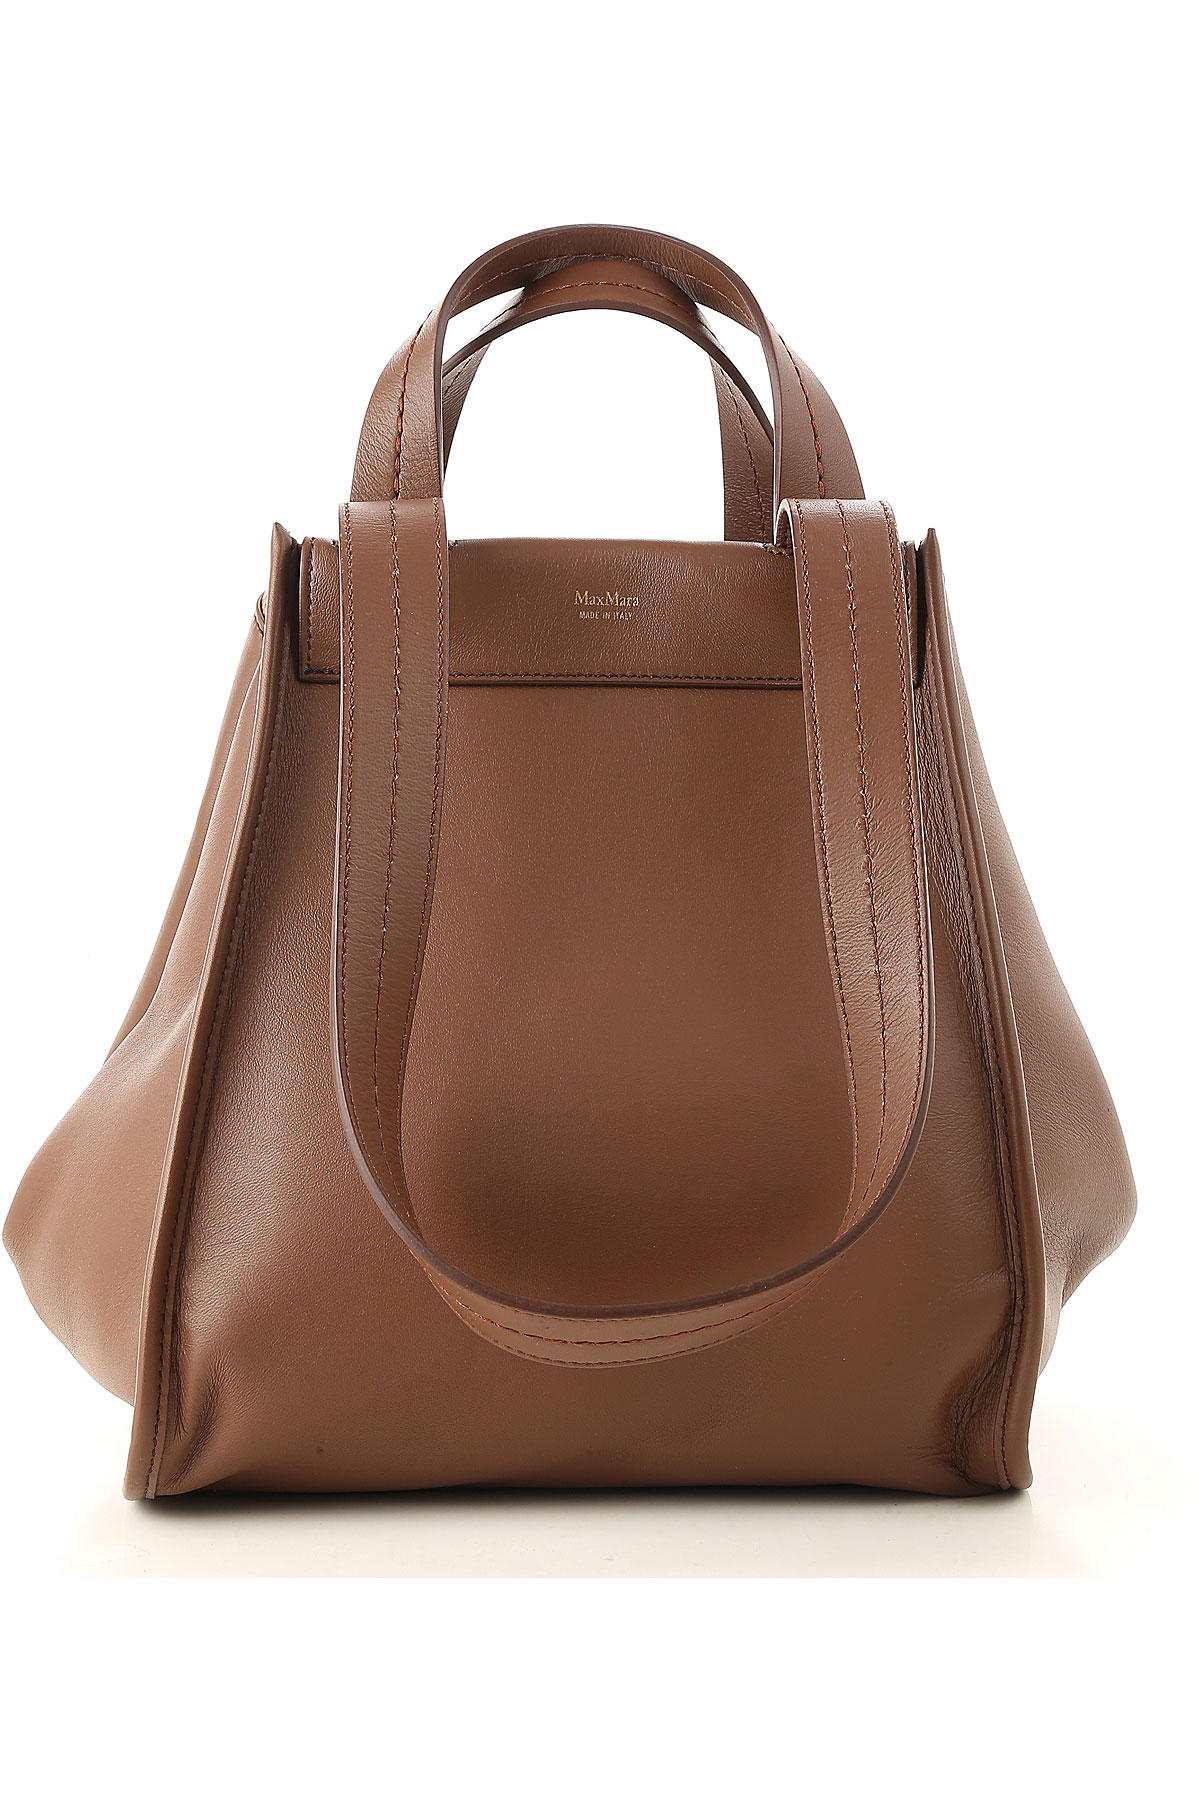 Handbags Max Mara, Style code: 45160287000--